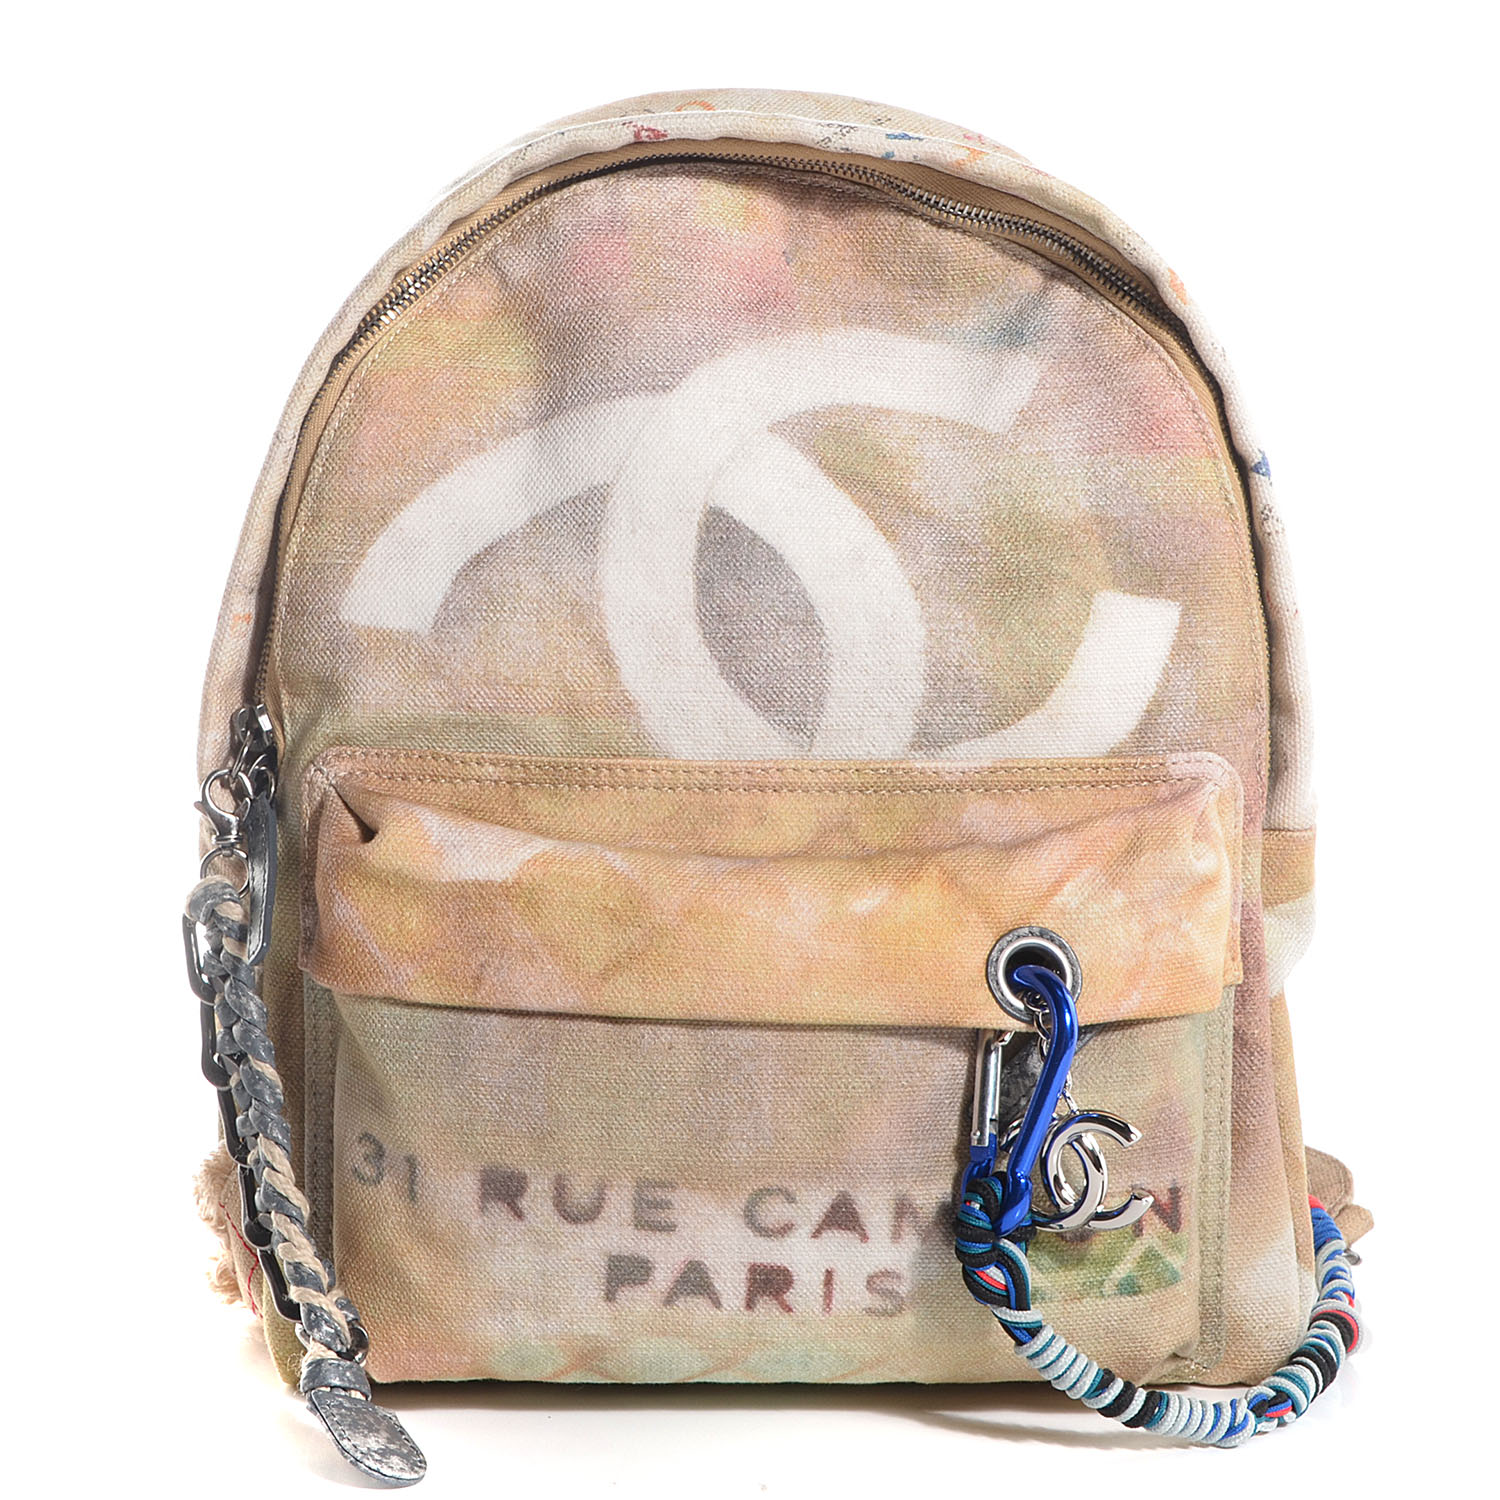 CHANEL Graffiti Printed Canvas Medium Backpack Beige 79723